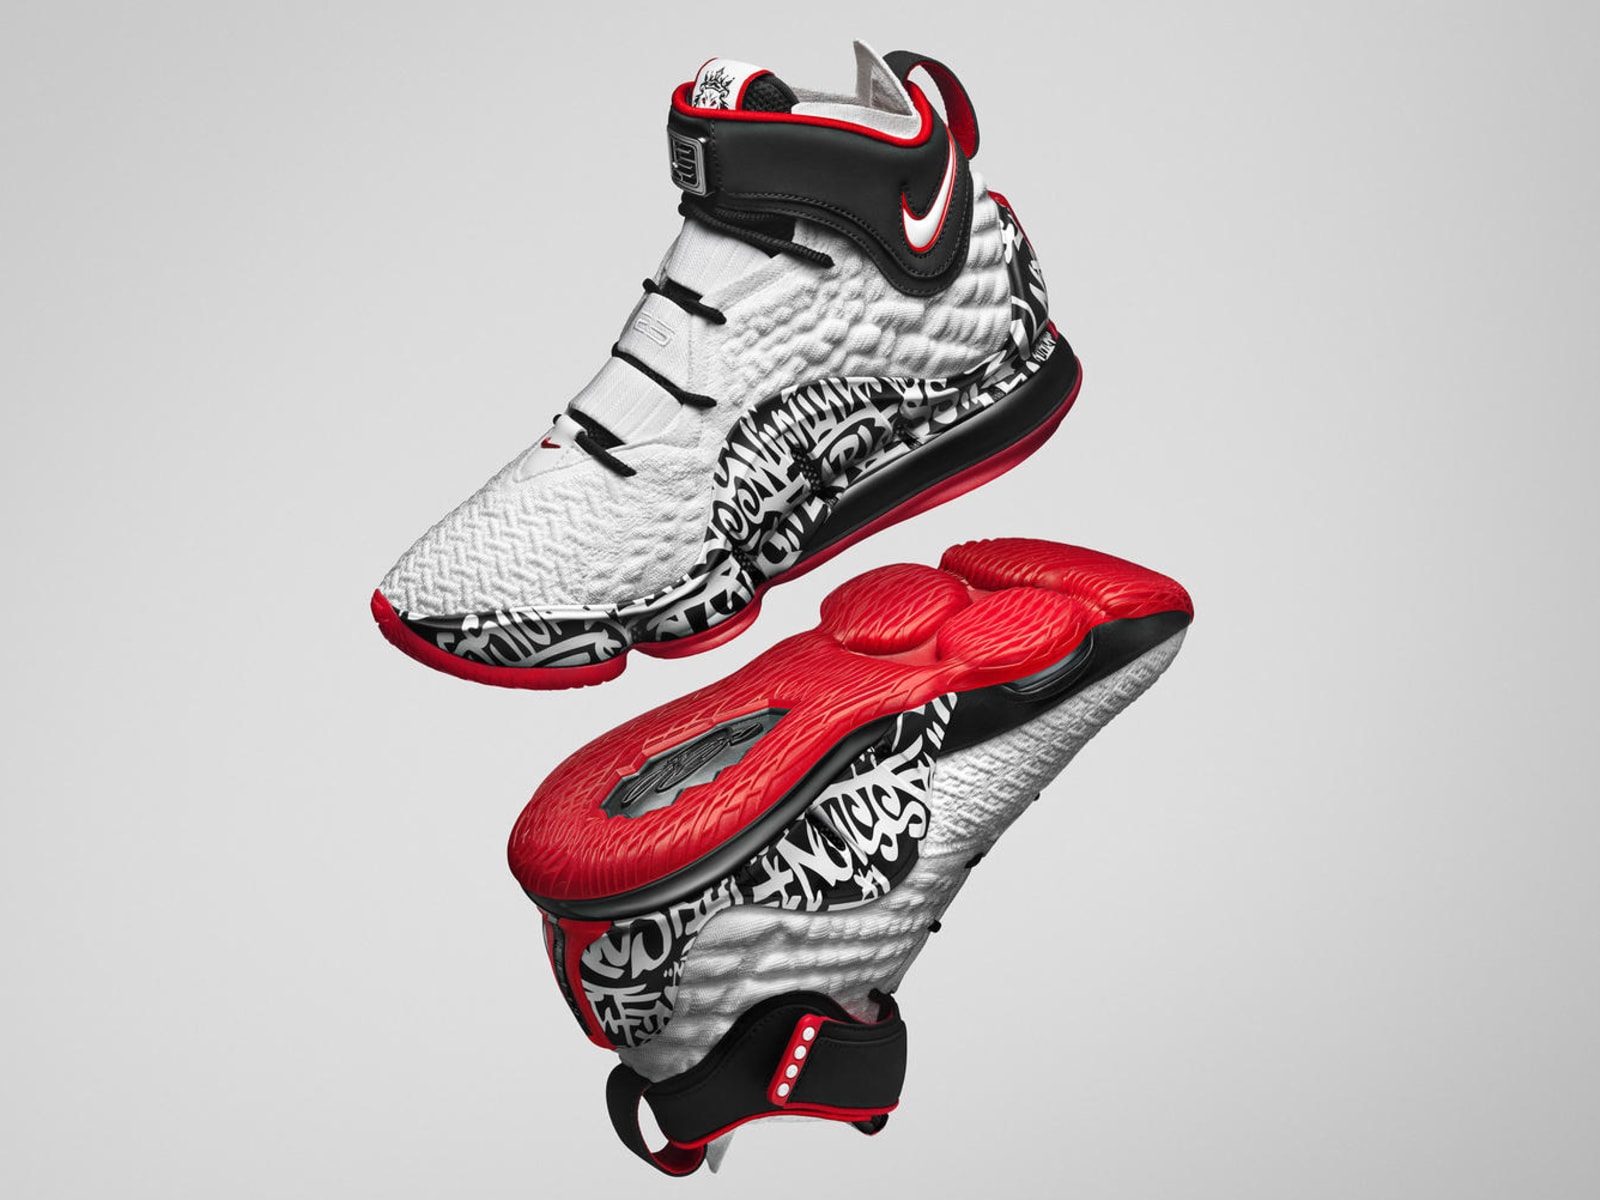 Three Air Jordan & One Nike LeBron Release Gets Delayed: Details